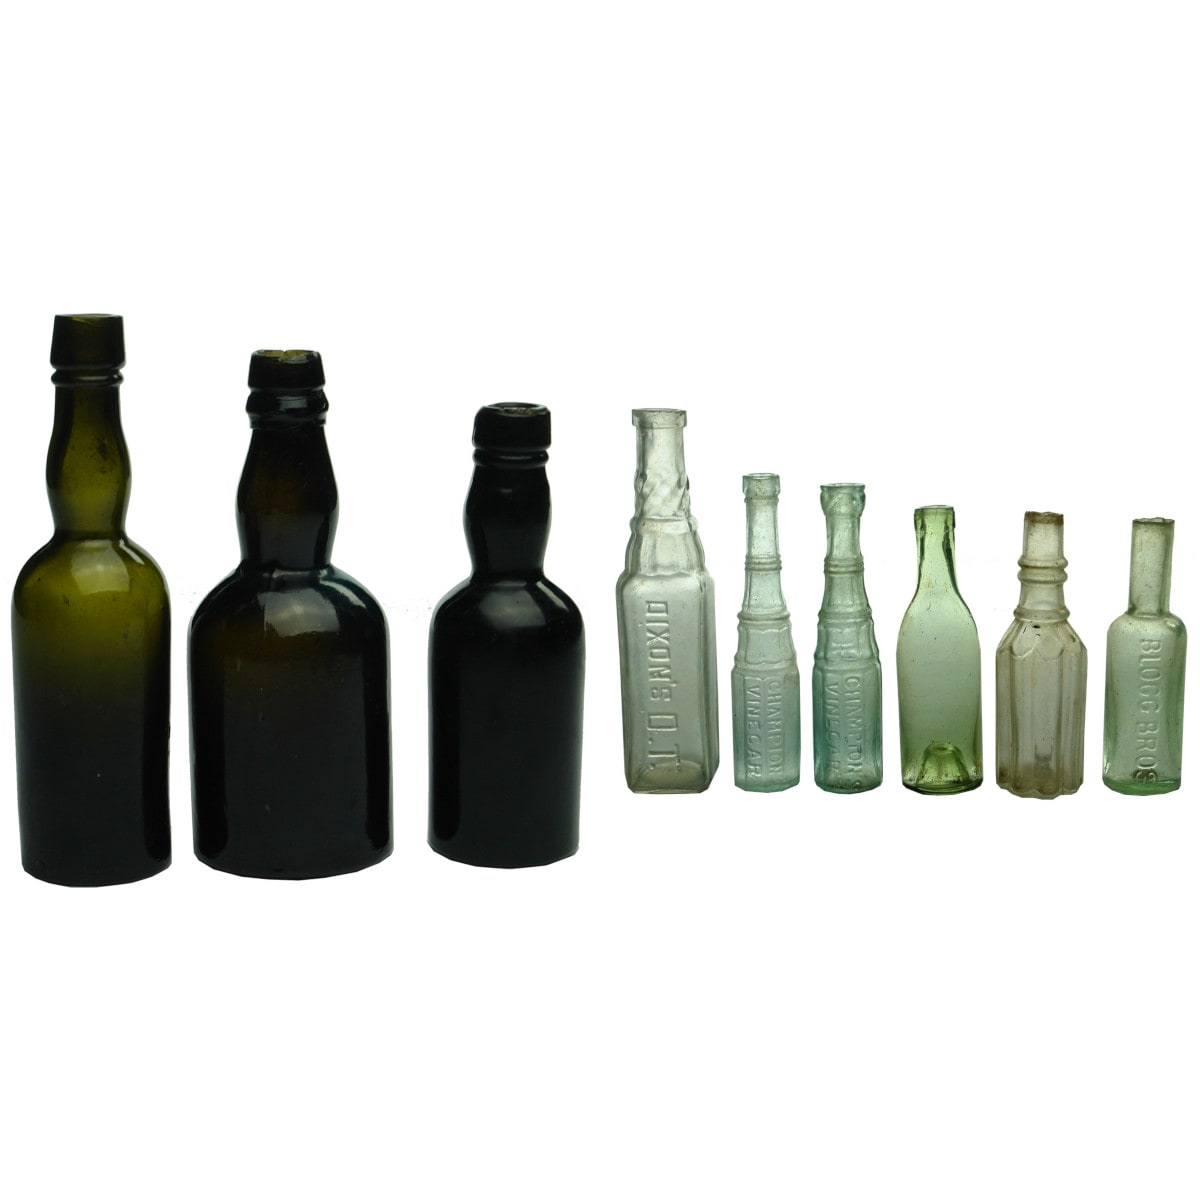 Nine Sample Bottles: 3 x black glass; Dixon's OT; 2 x Champions Vinegar; Fluted Harper & Co; Blogg Bros; Cognac.